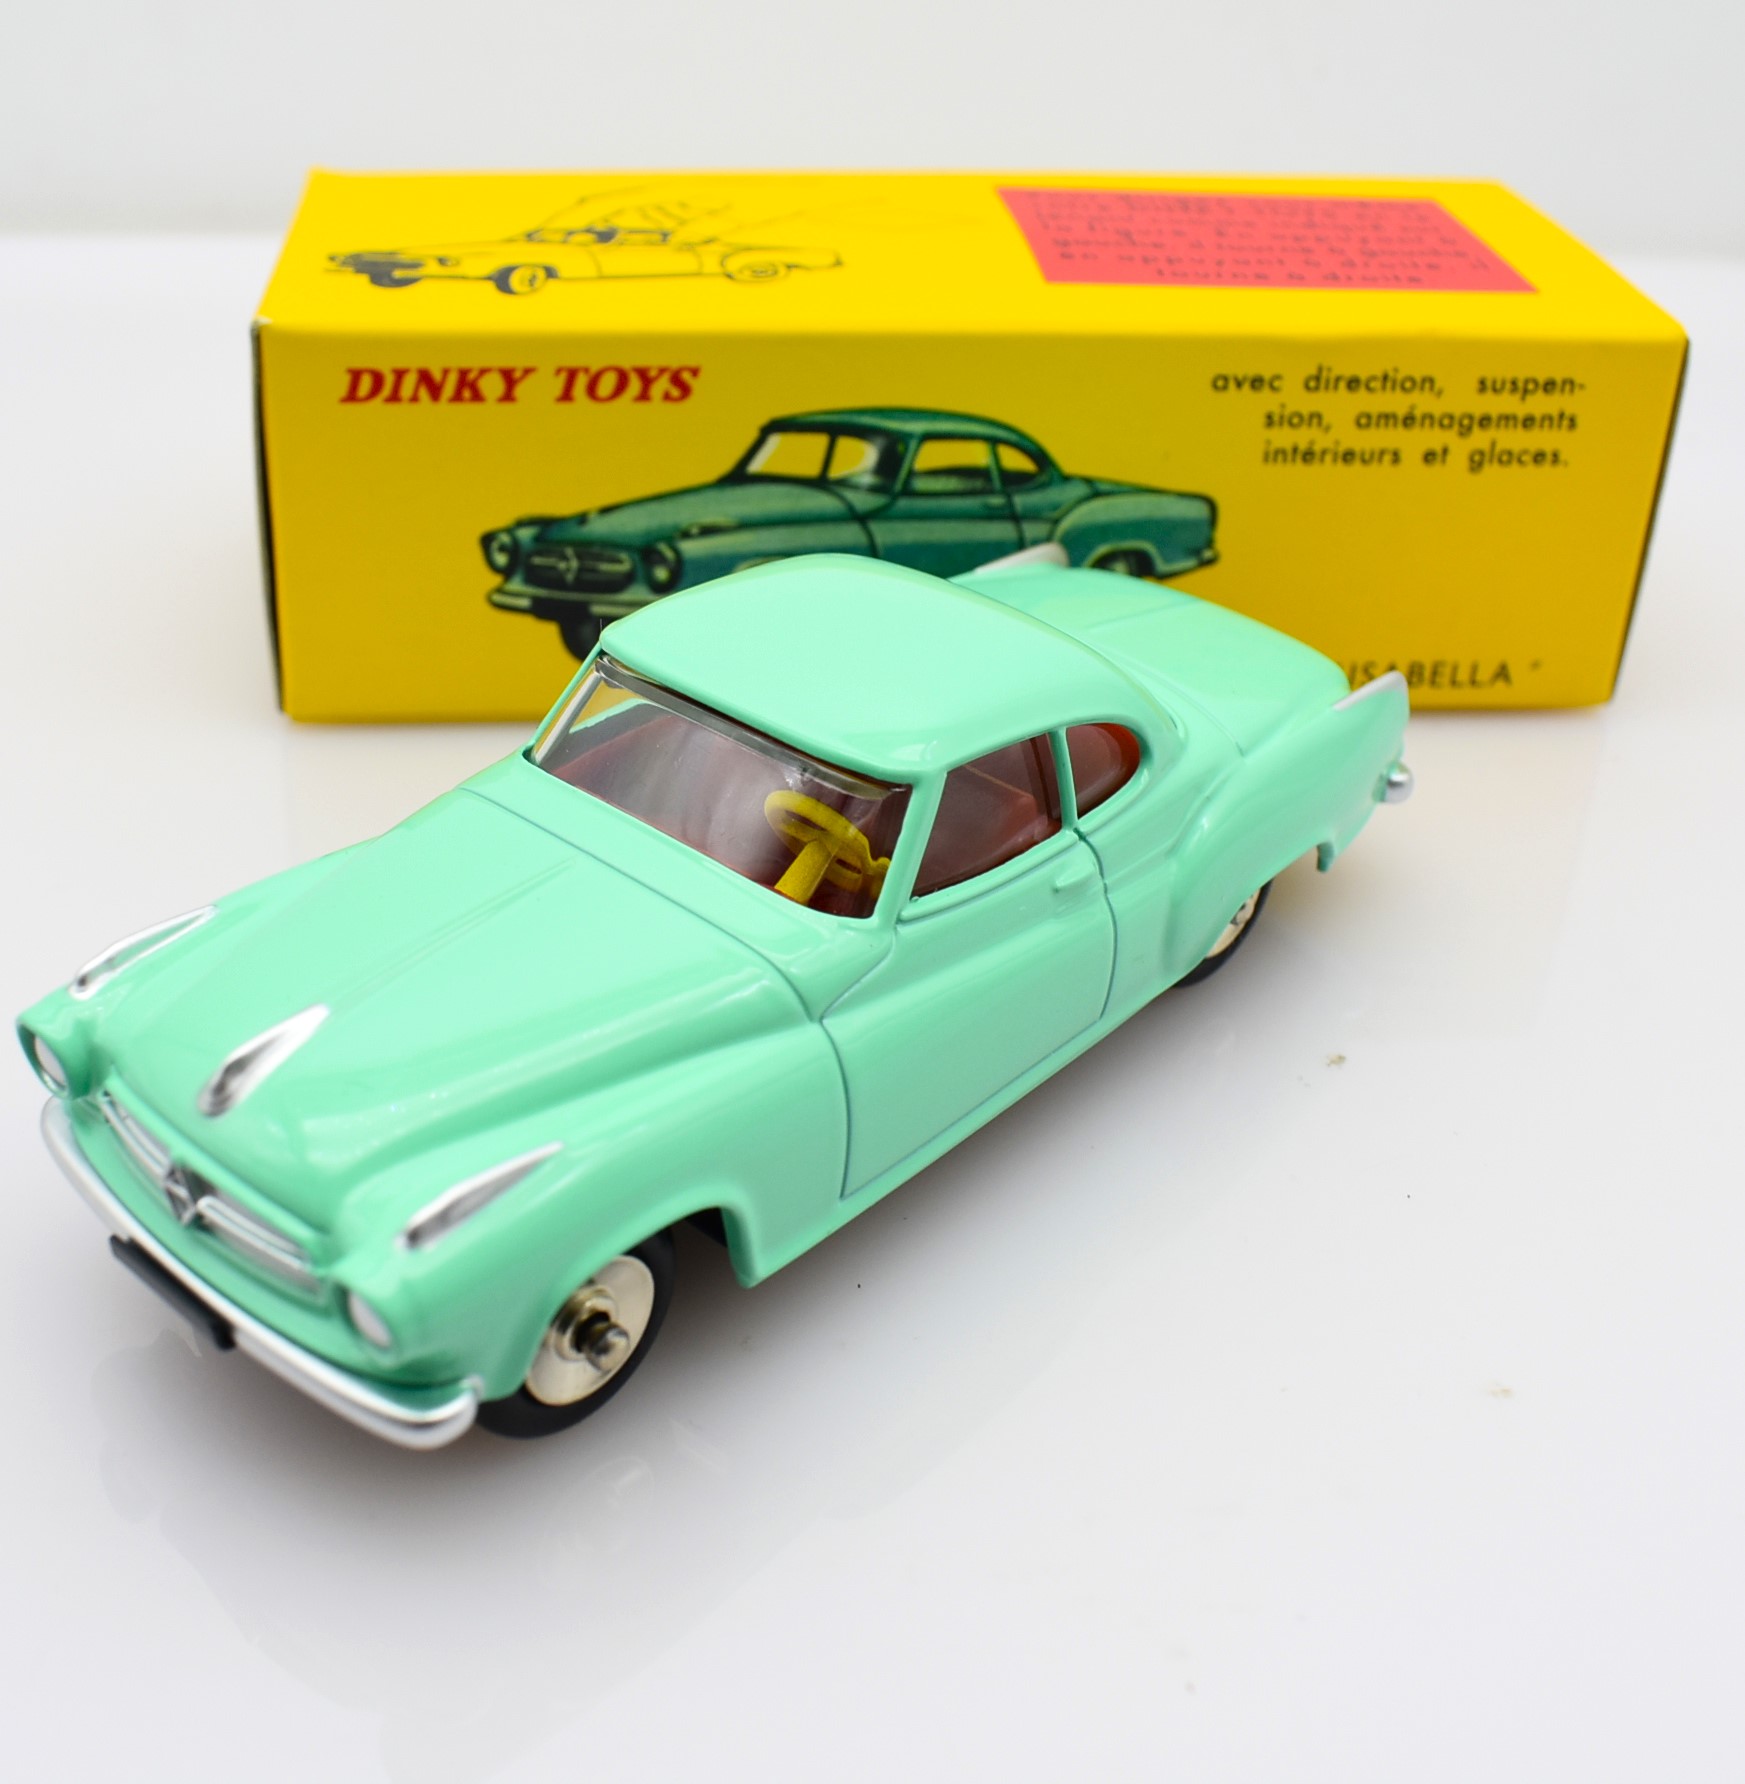 modellauto Auto dinky Toys Maßstabmodellbauautomodell